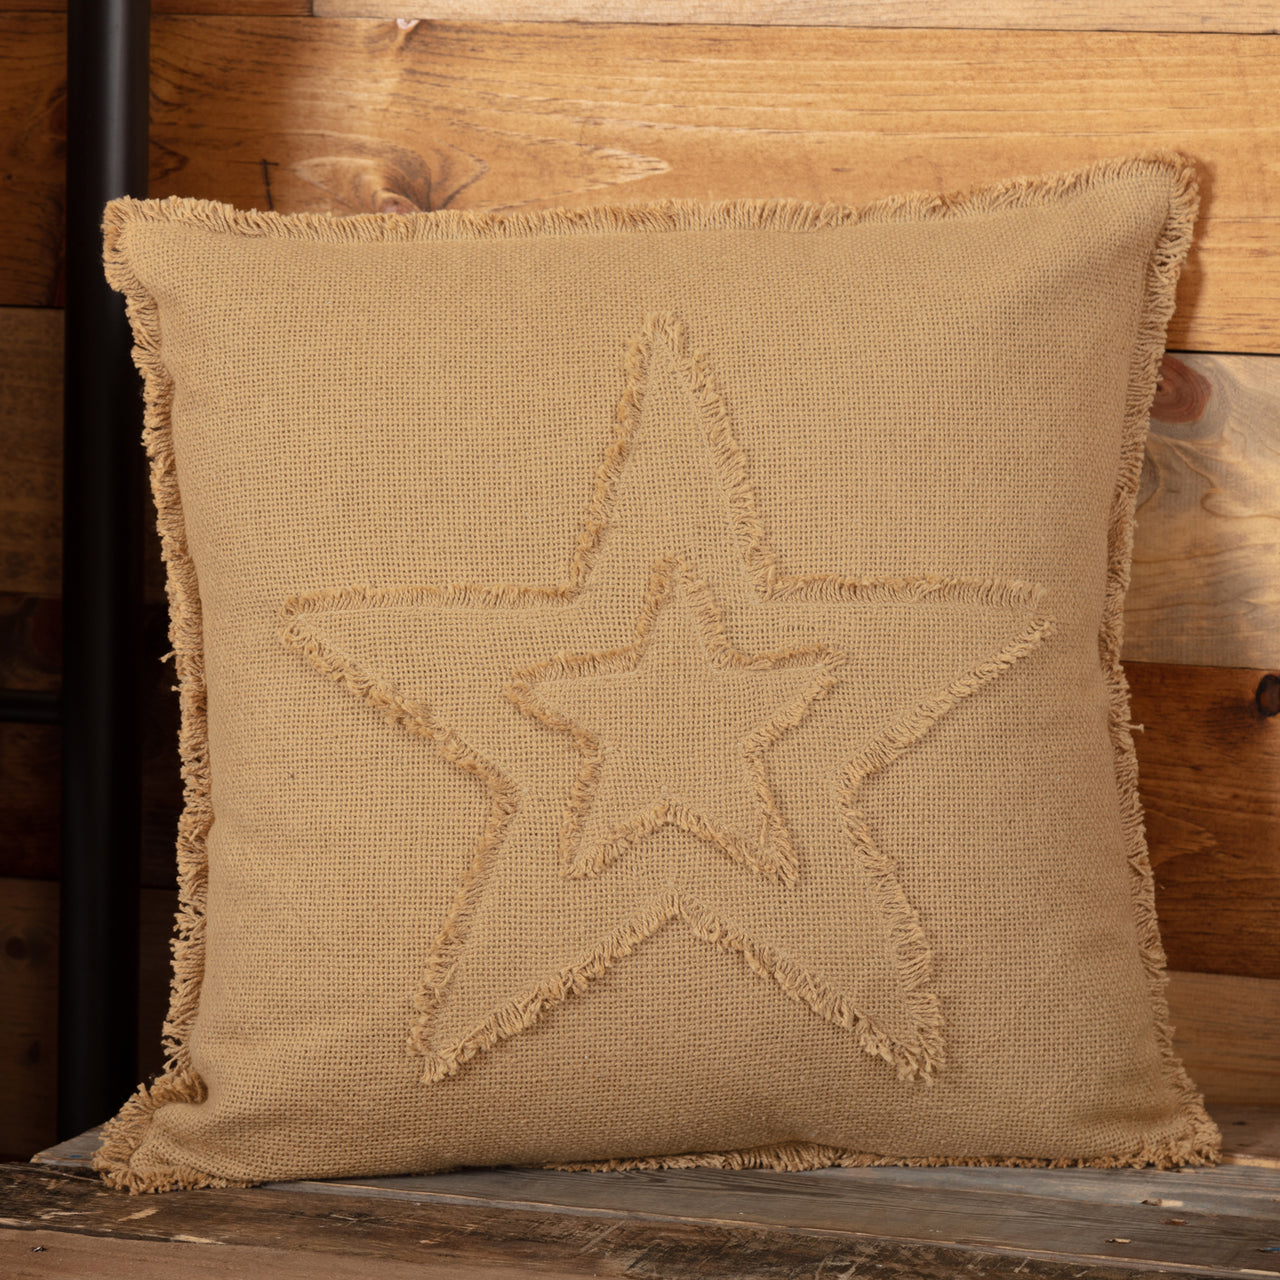 Burlap Natural Star Pillow 18x18 VHC Brands